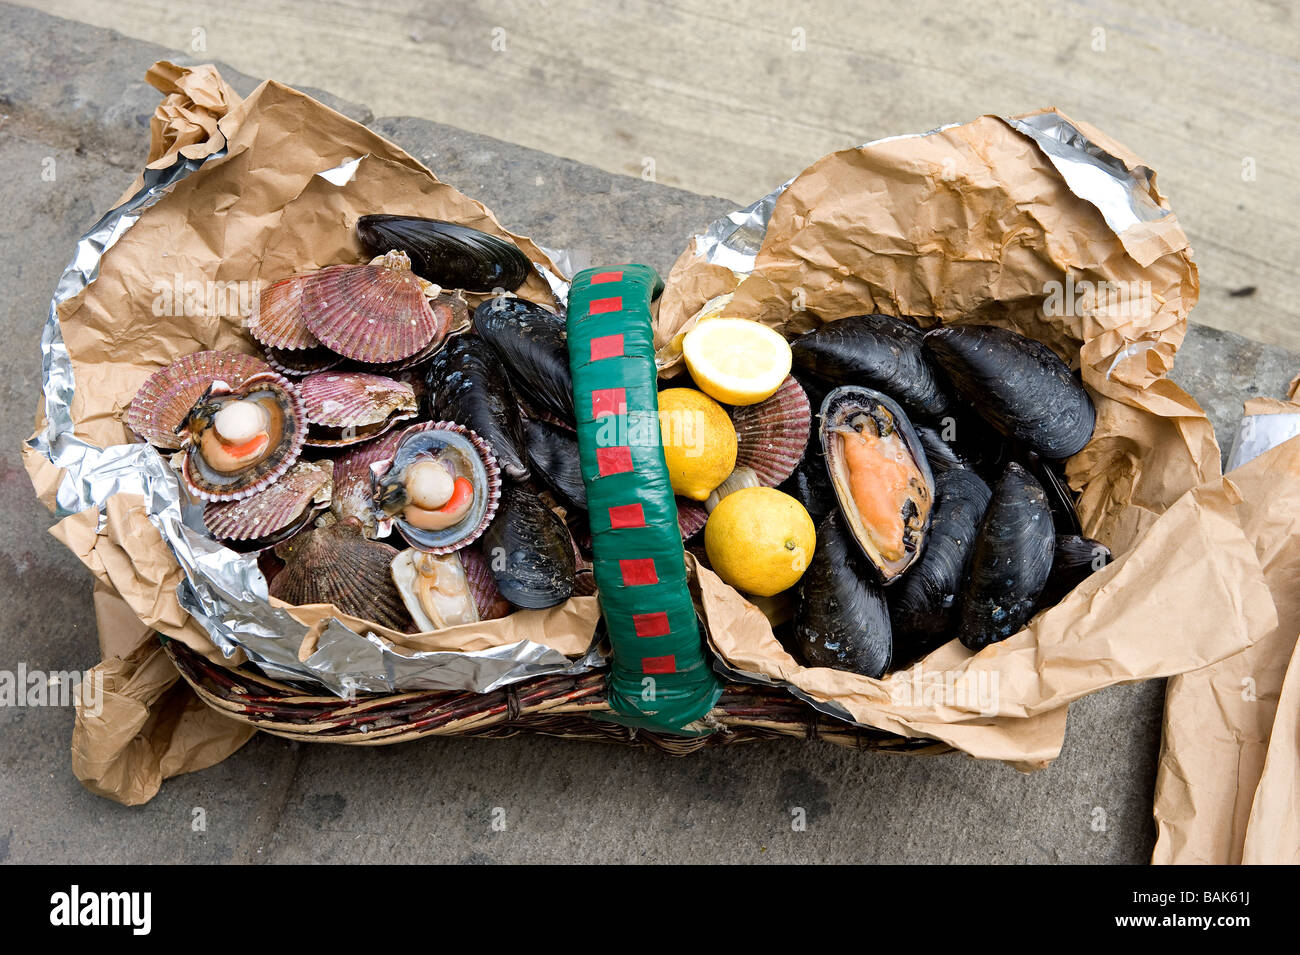 Chile, Valparaiso Region, Valparaiso, sea food basket sold on the street Stock Photo